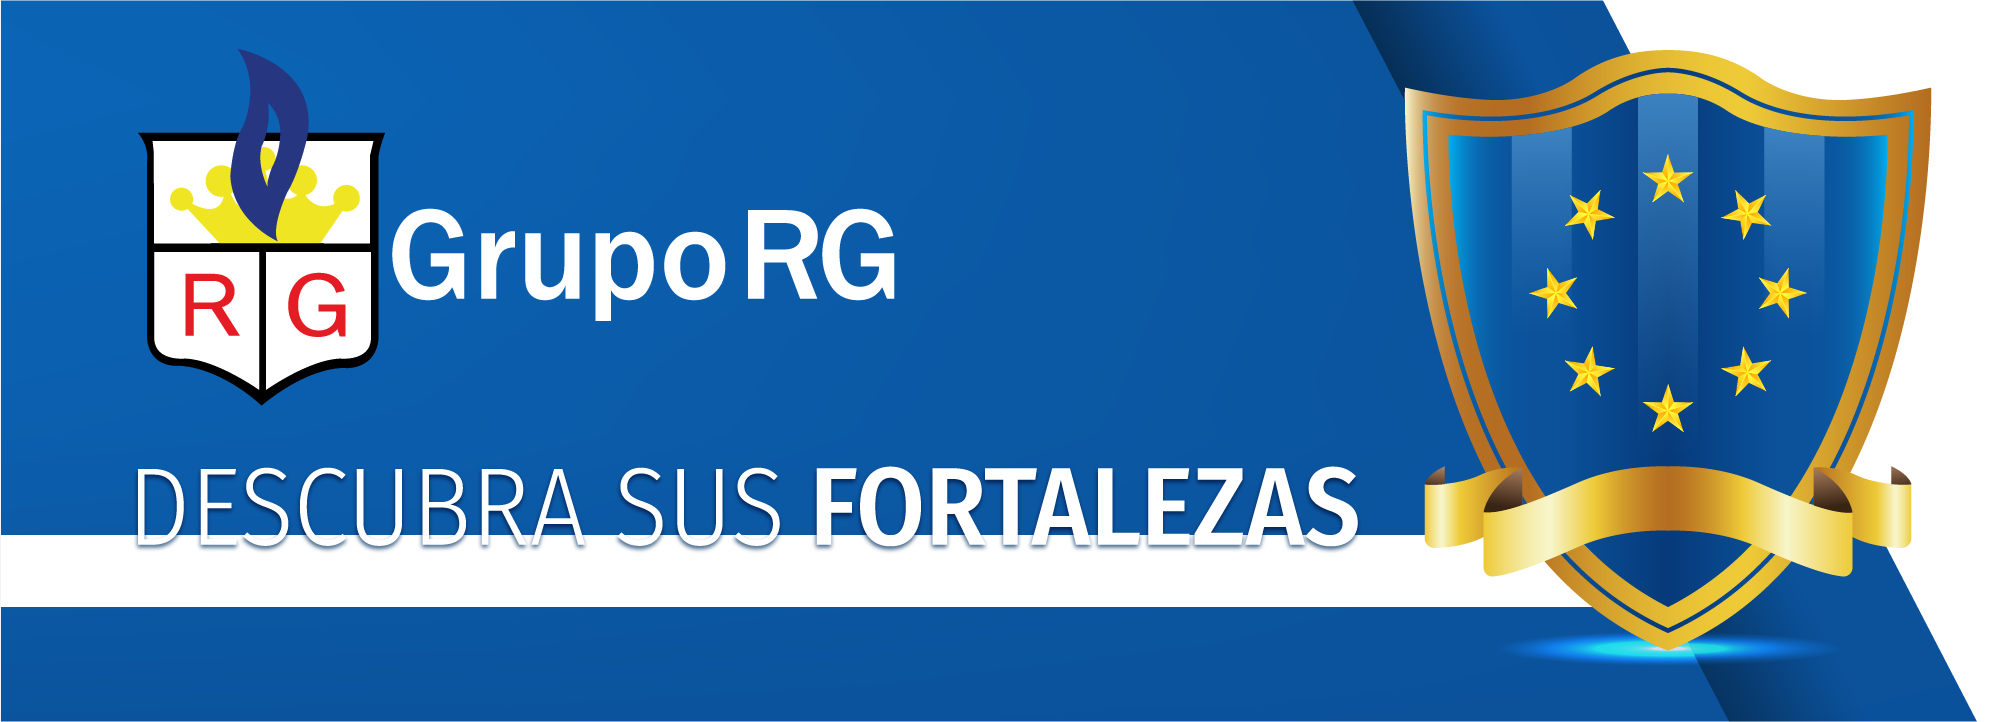 Descubra sus fortalezas - Gerentes GrupoRG - Gpo2 Fort-0004